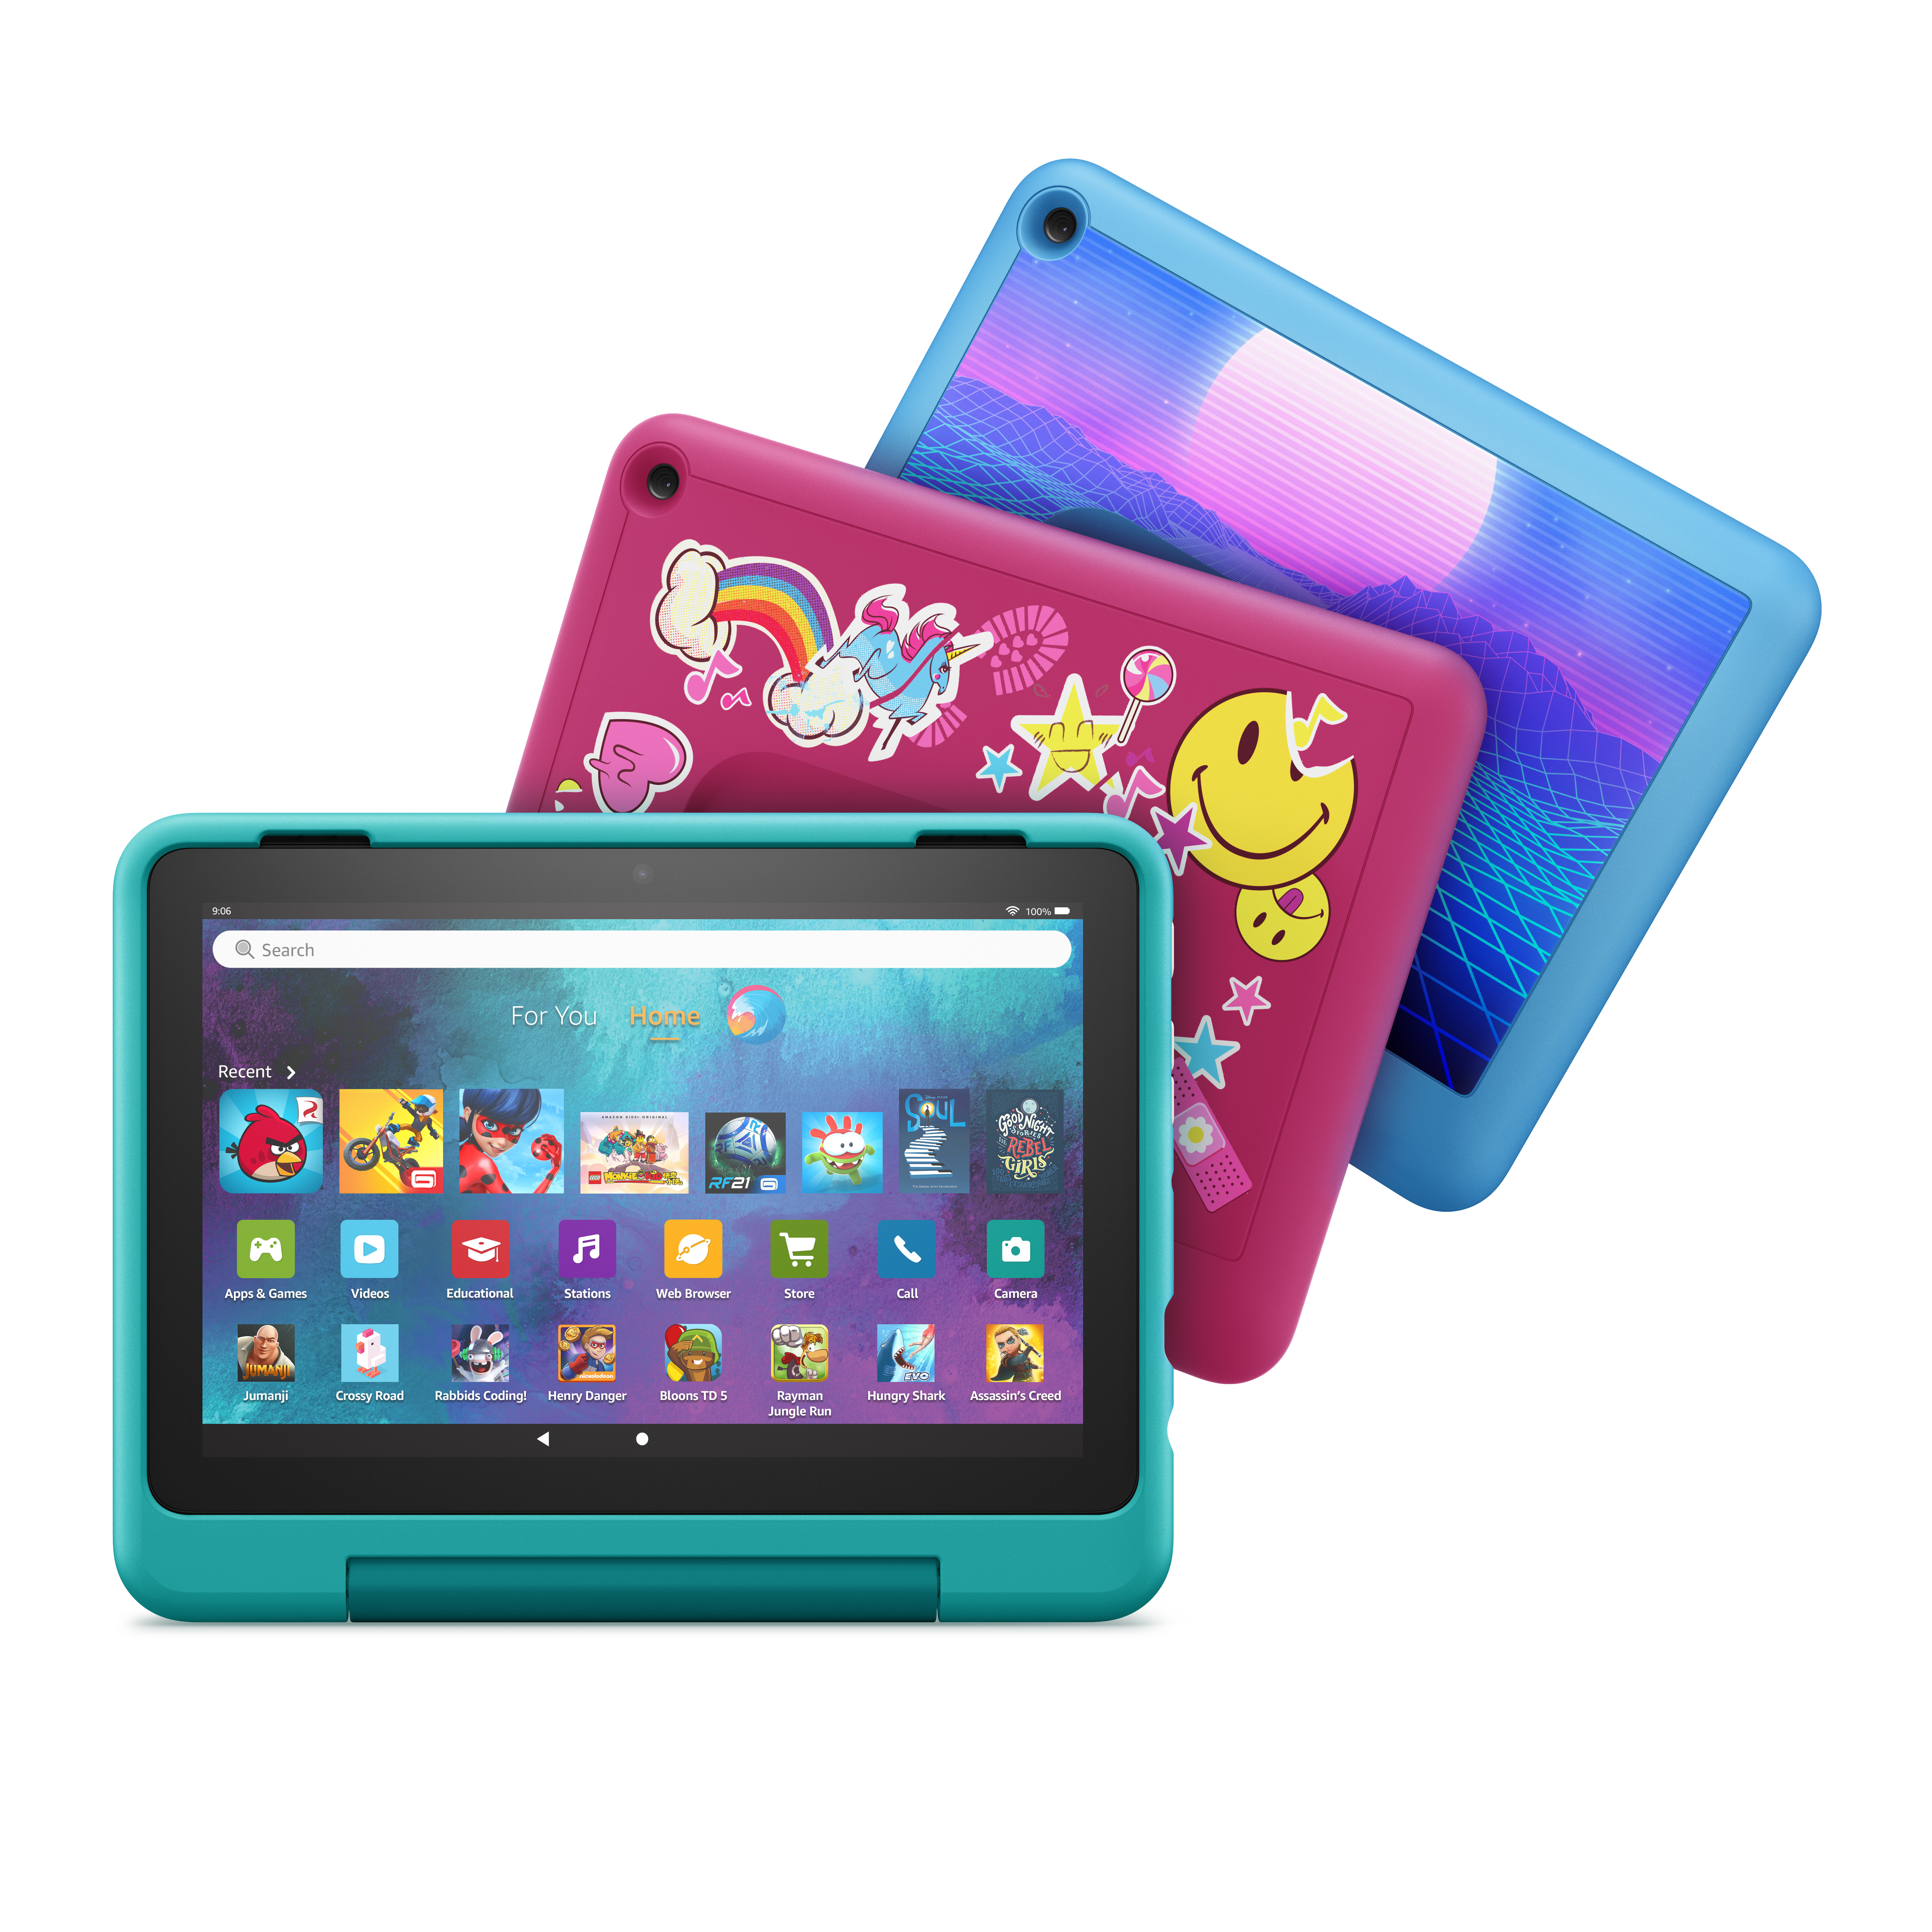 Fire HD Kids Edition tablet - review, Children's tech